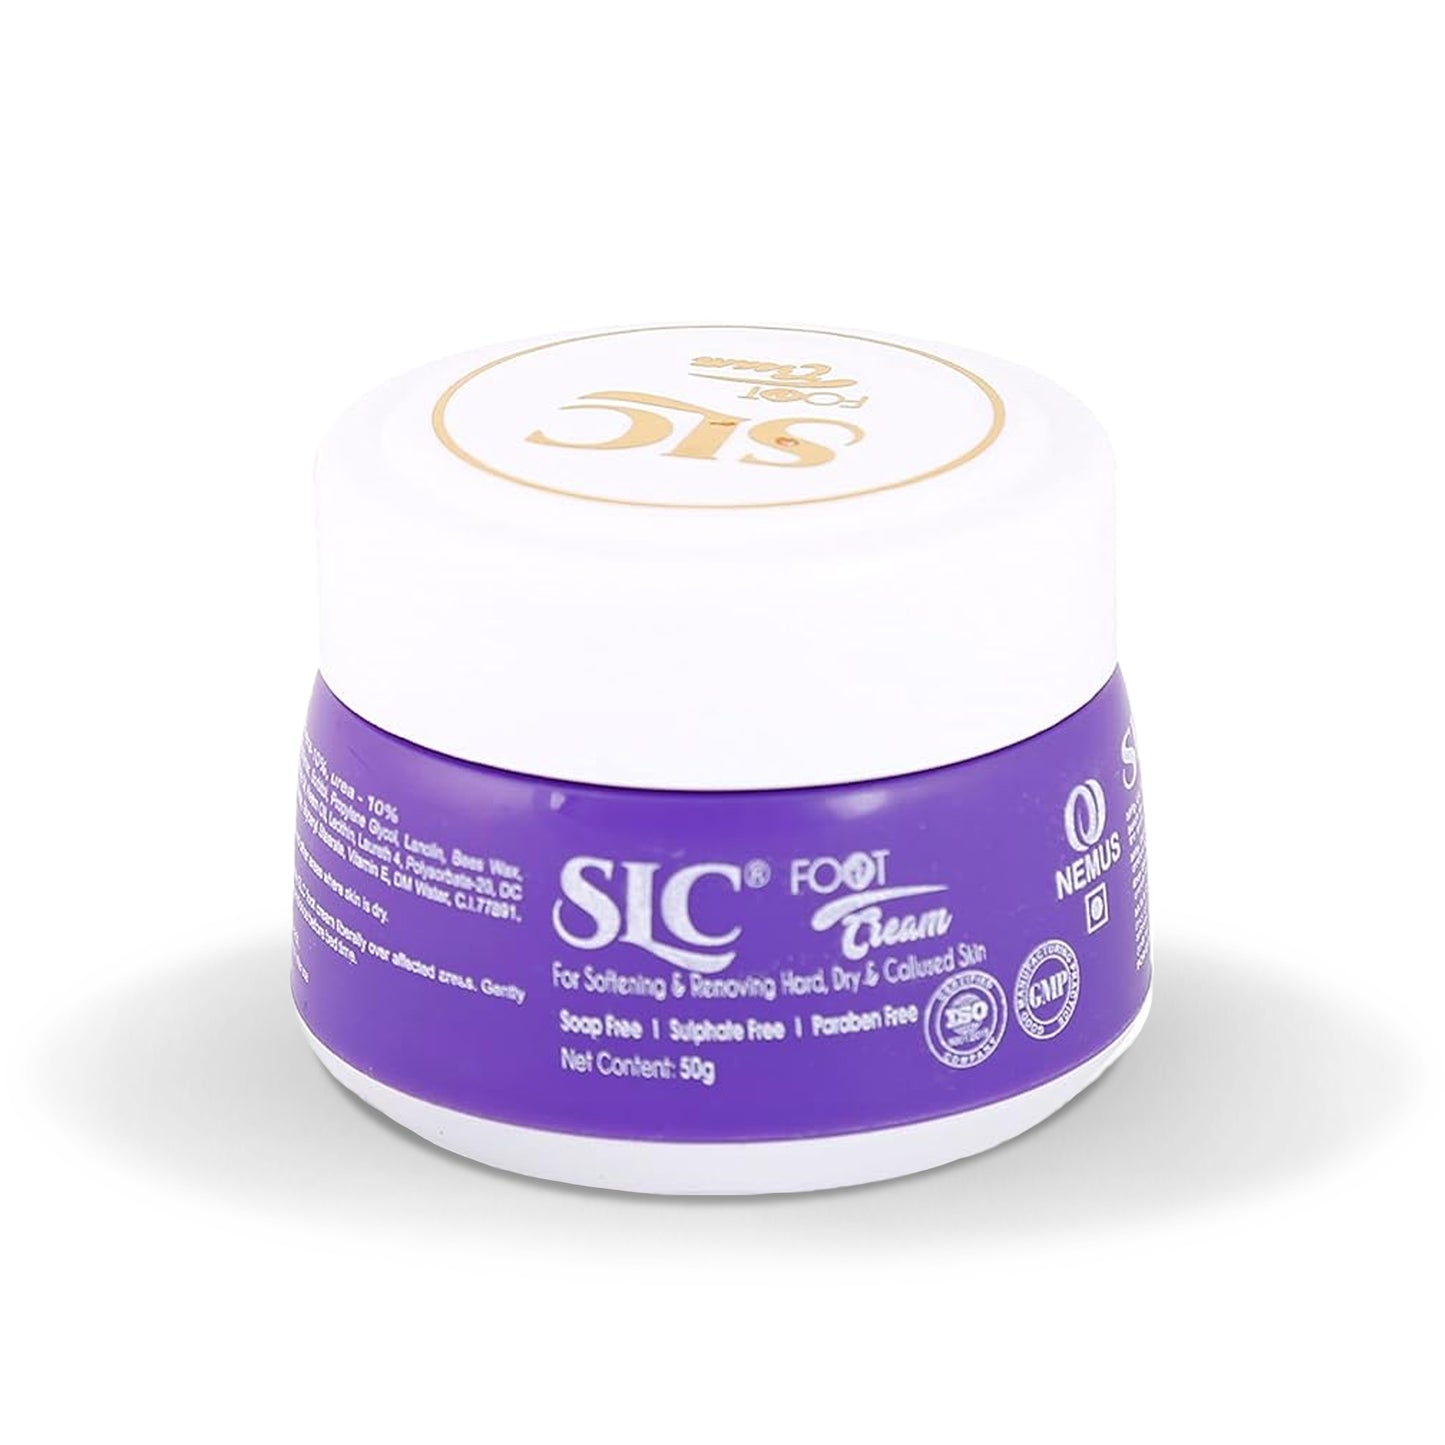 SLC Foot Cream, 50gm